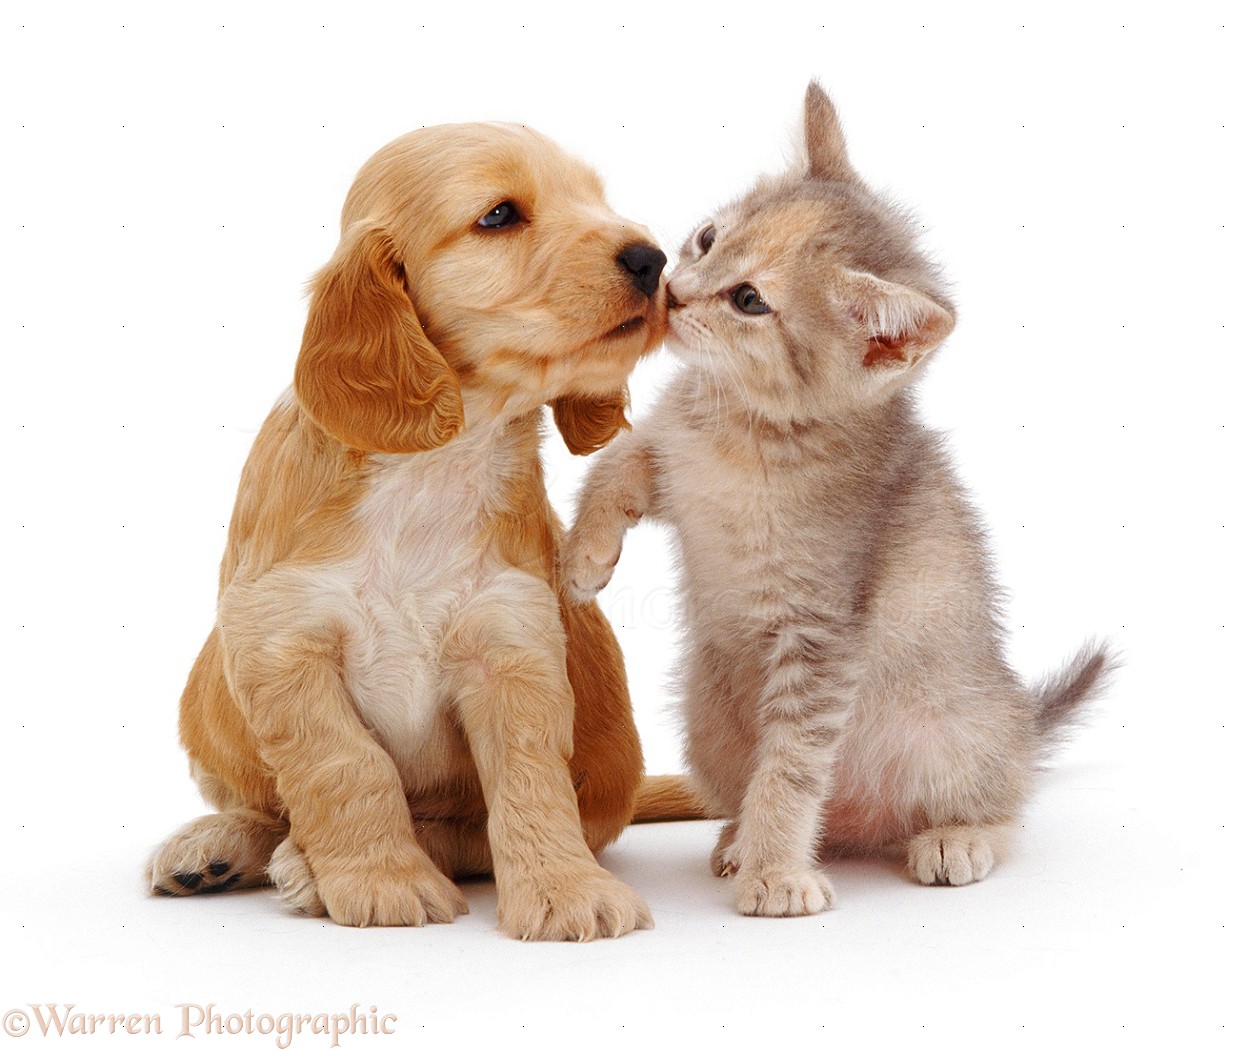 Cute Puppy And Kitten Wallpapers - Wallpapersafari